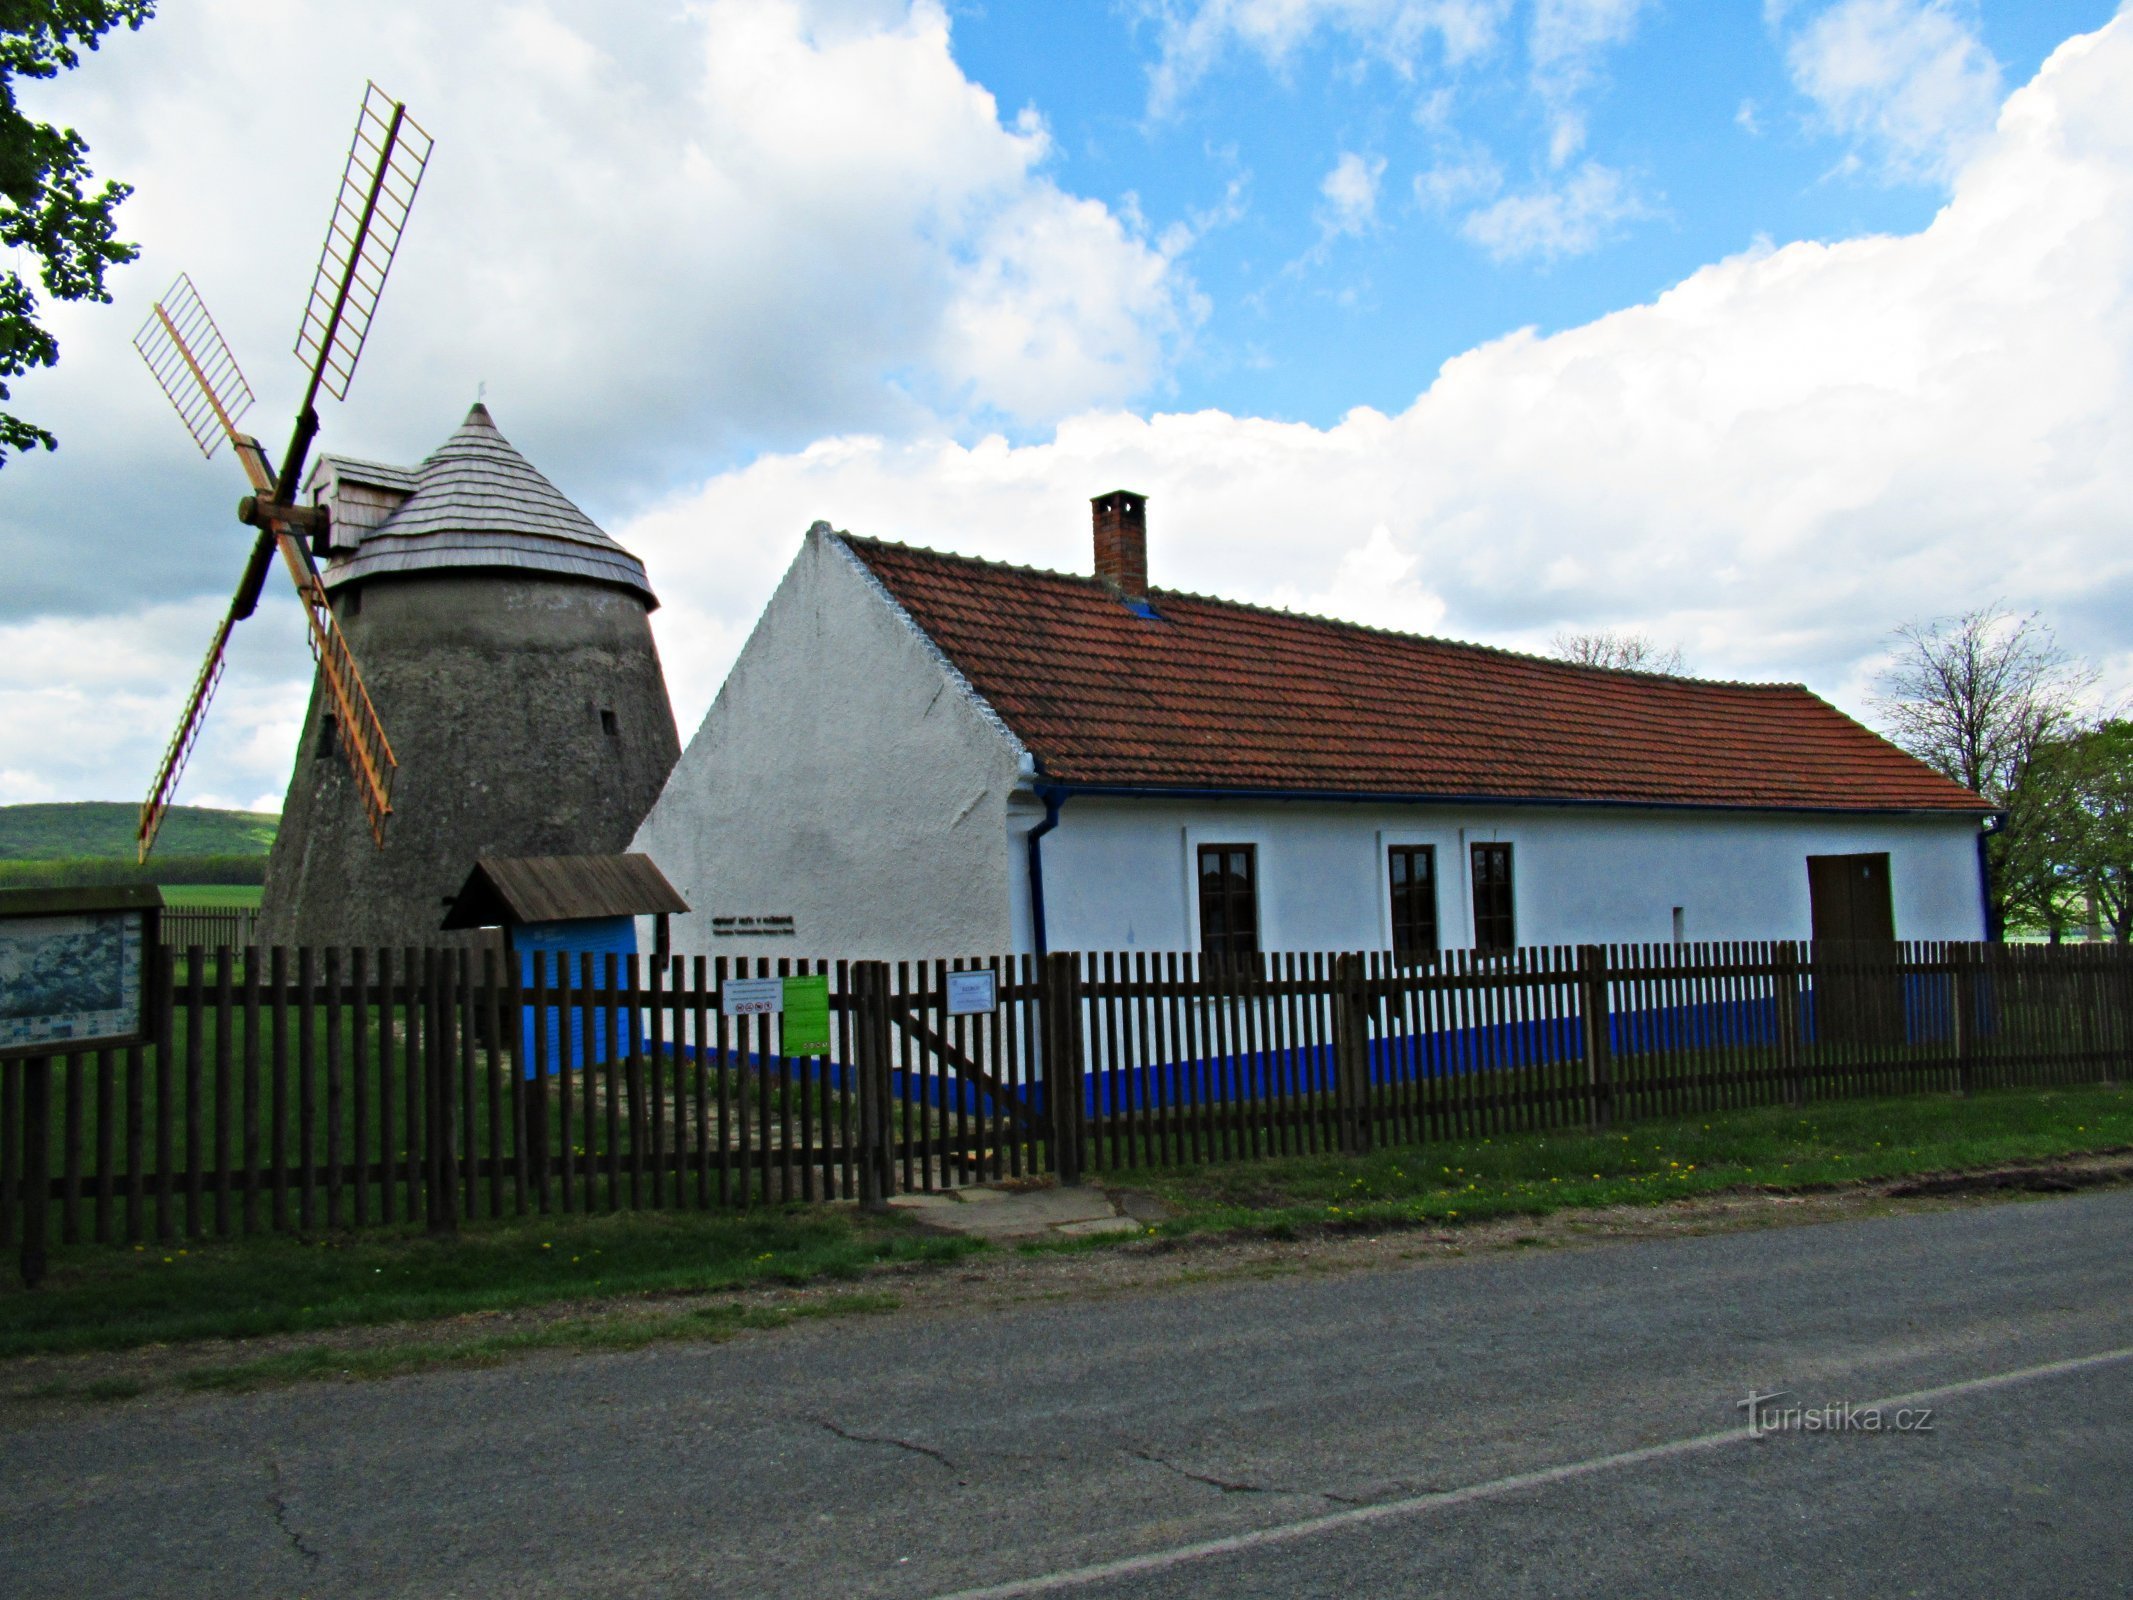 Området med vindmøllen over landsbyen Kuželov i Slovácko